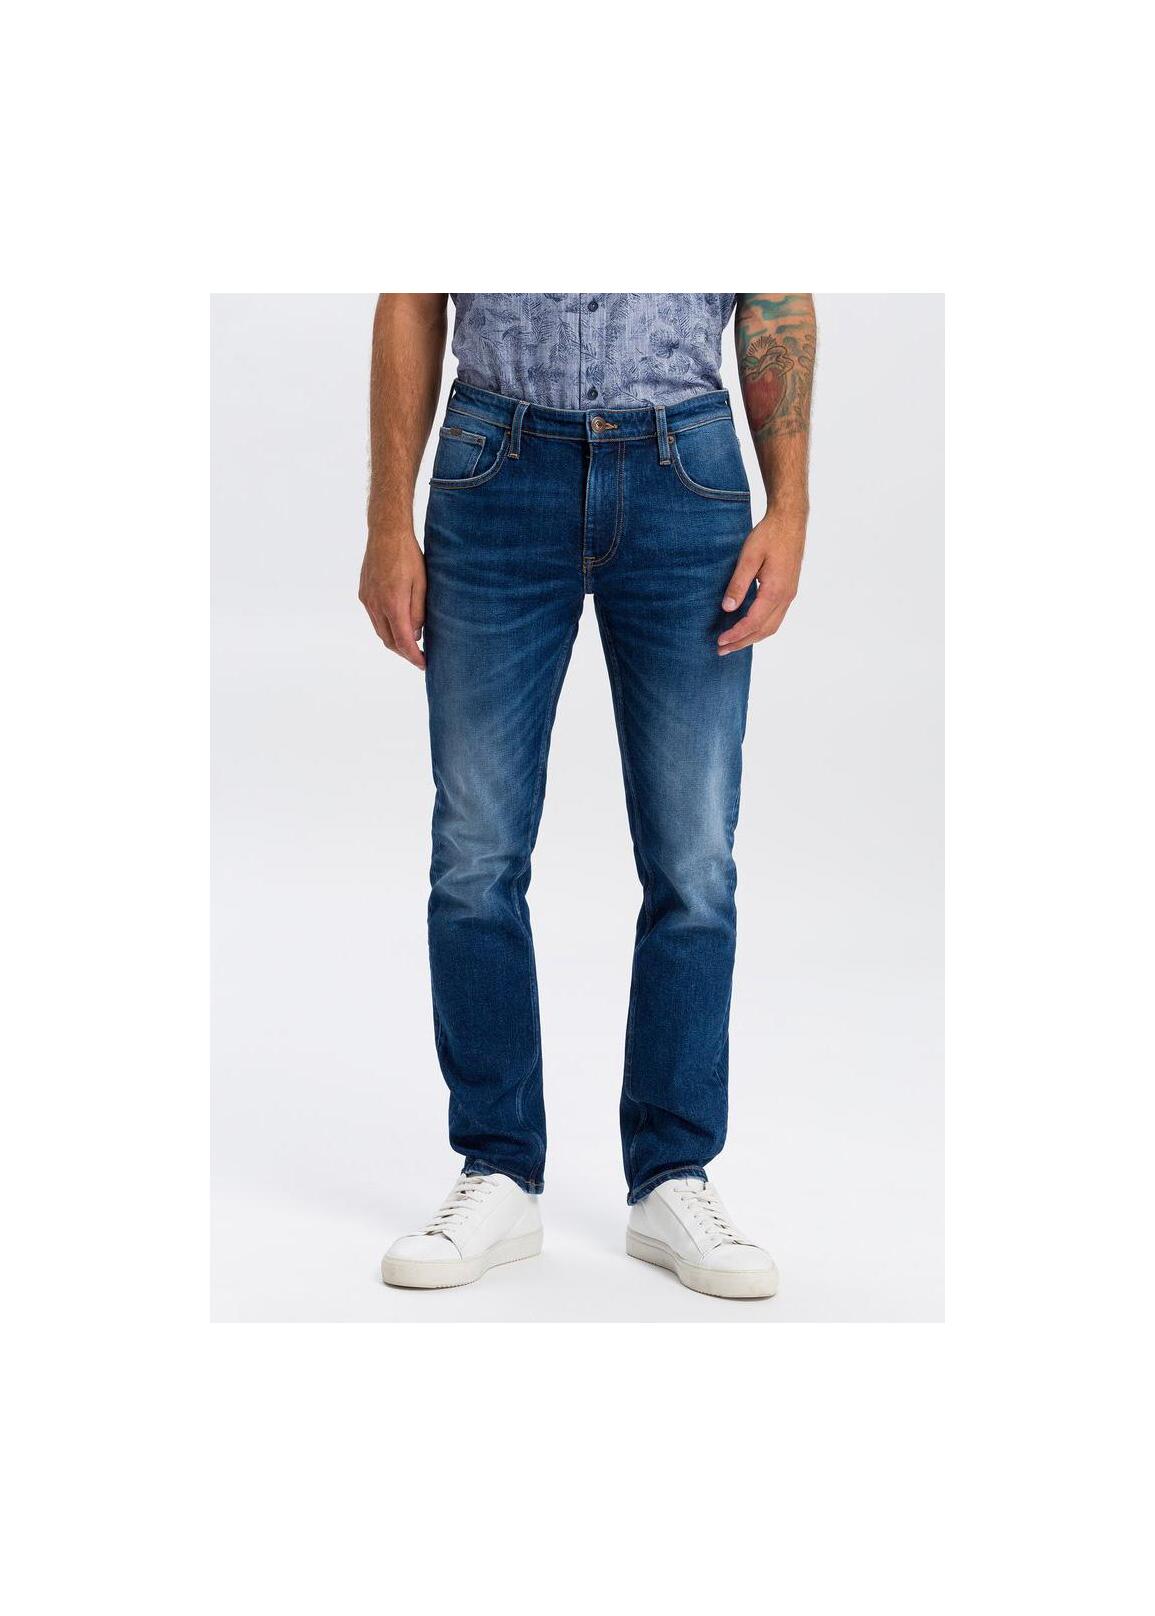 Cross Jeans® Damien Straight - Denim Blue (024)